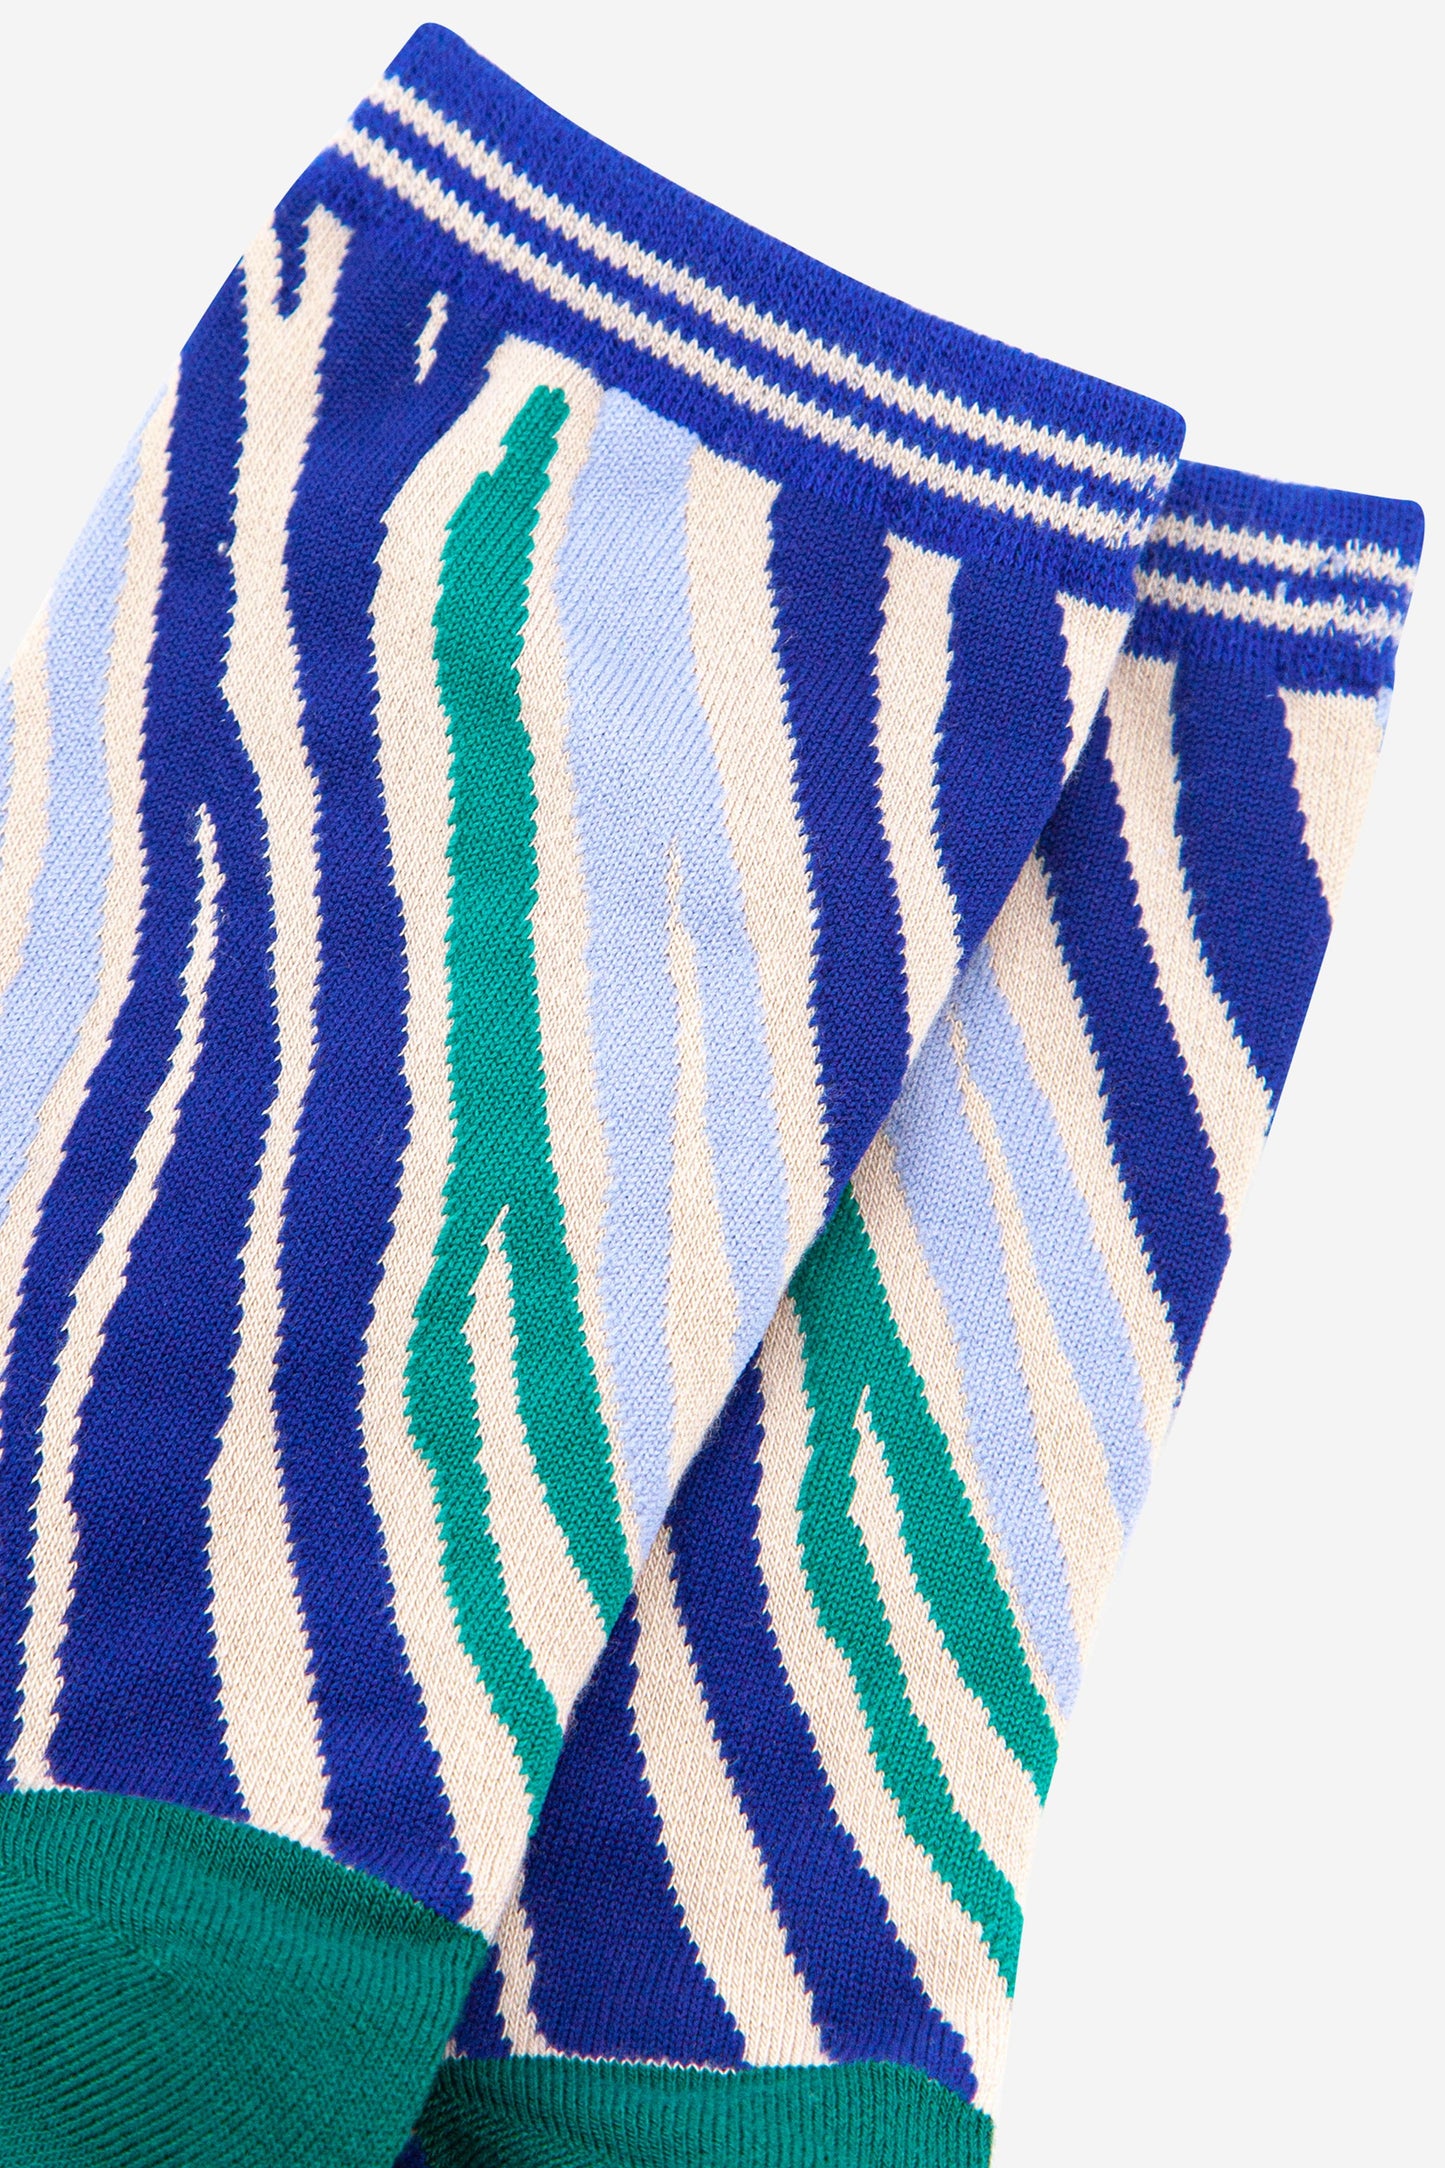 close up of the blue and green zebra print design